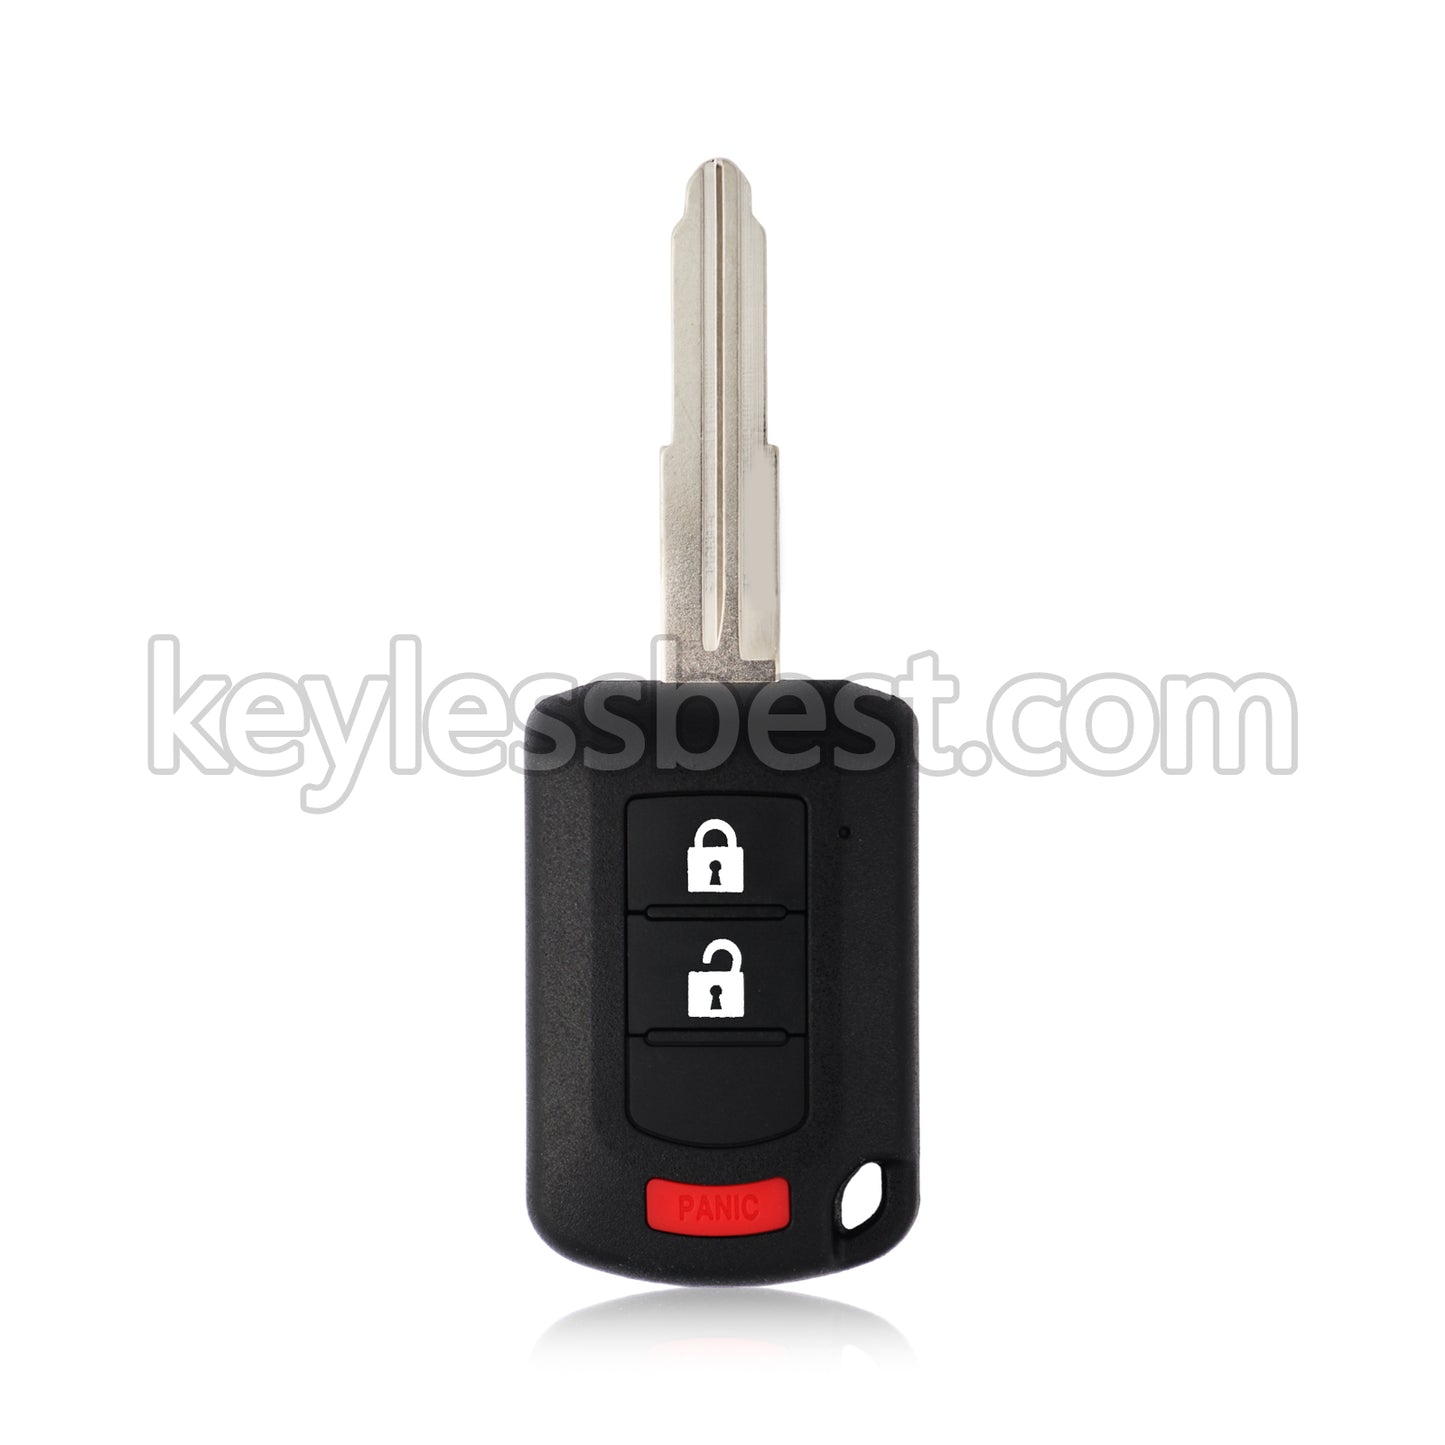 2013 - 2019 Mitsubishi Lancer Outlander Sport / 3 Buttons Remote Key / OUCJ166N / 315MHz